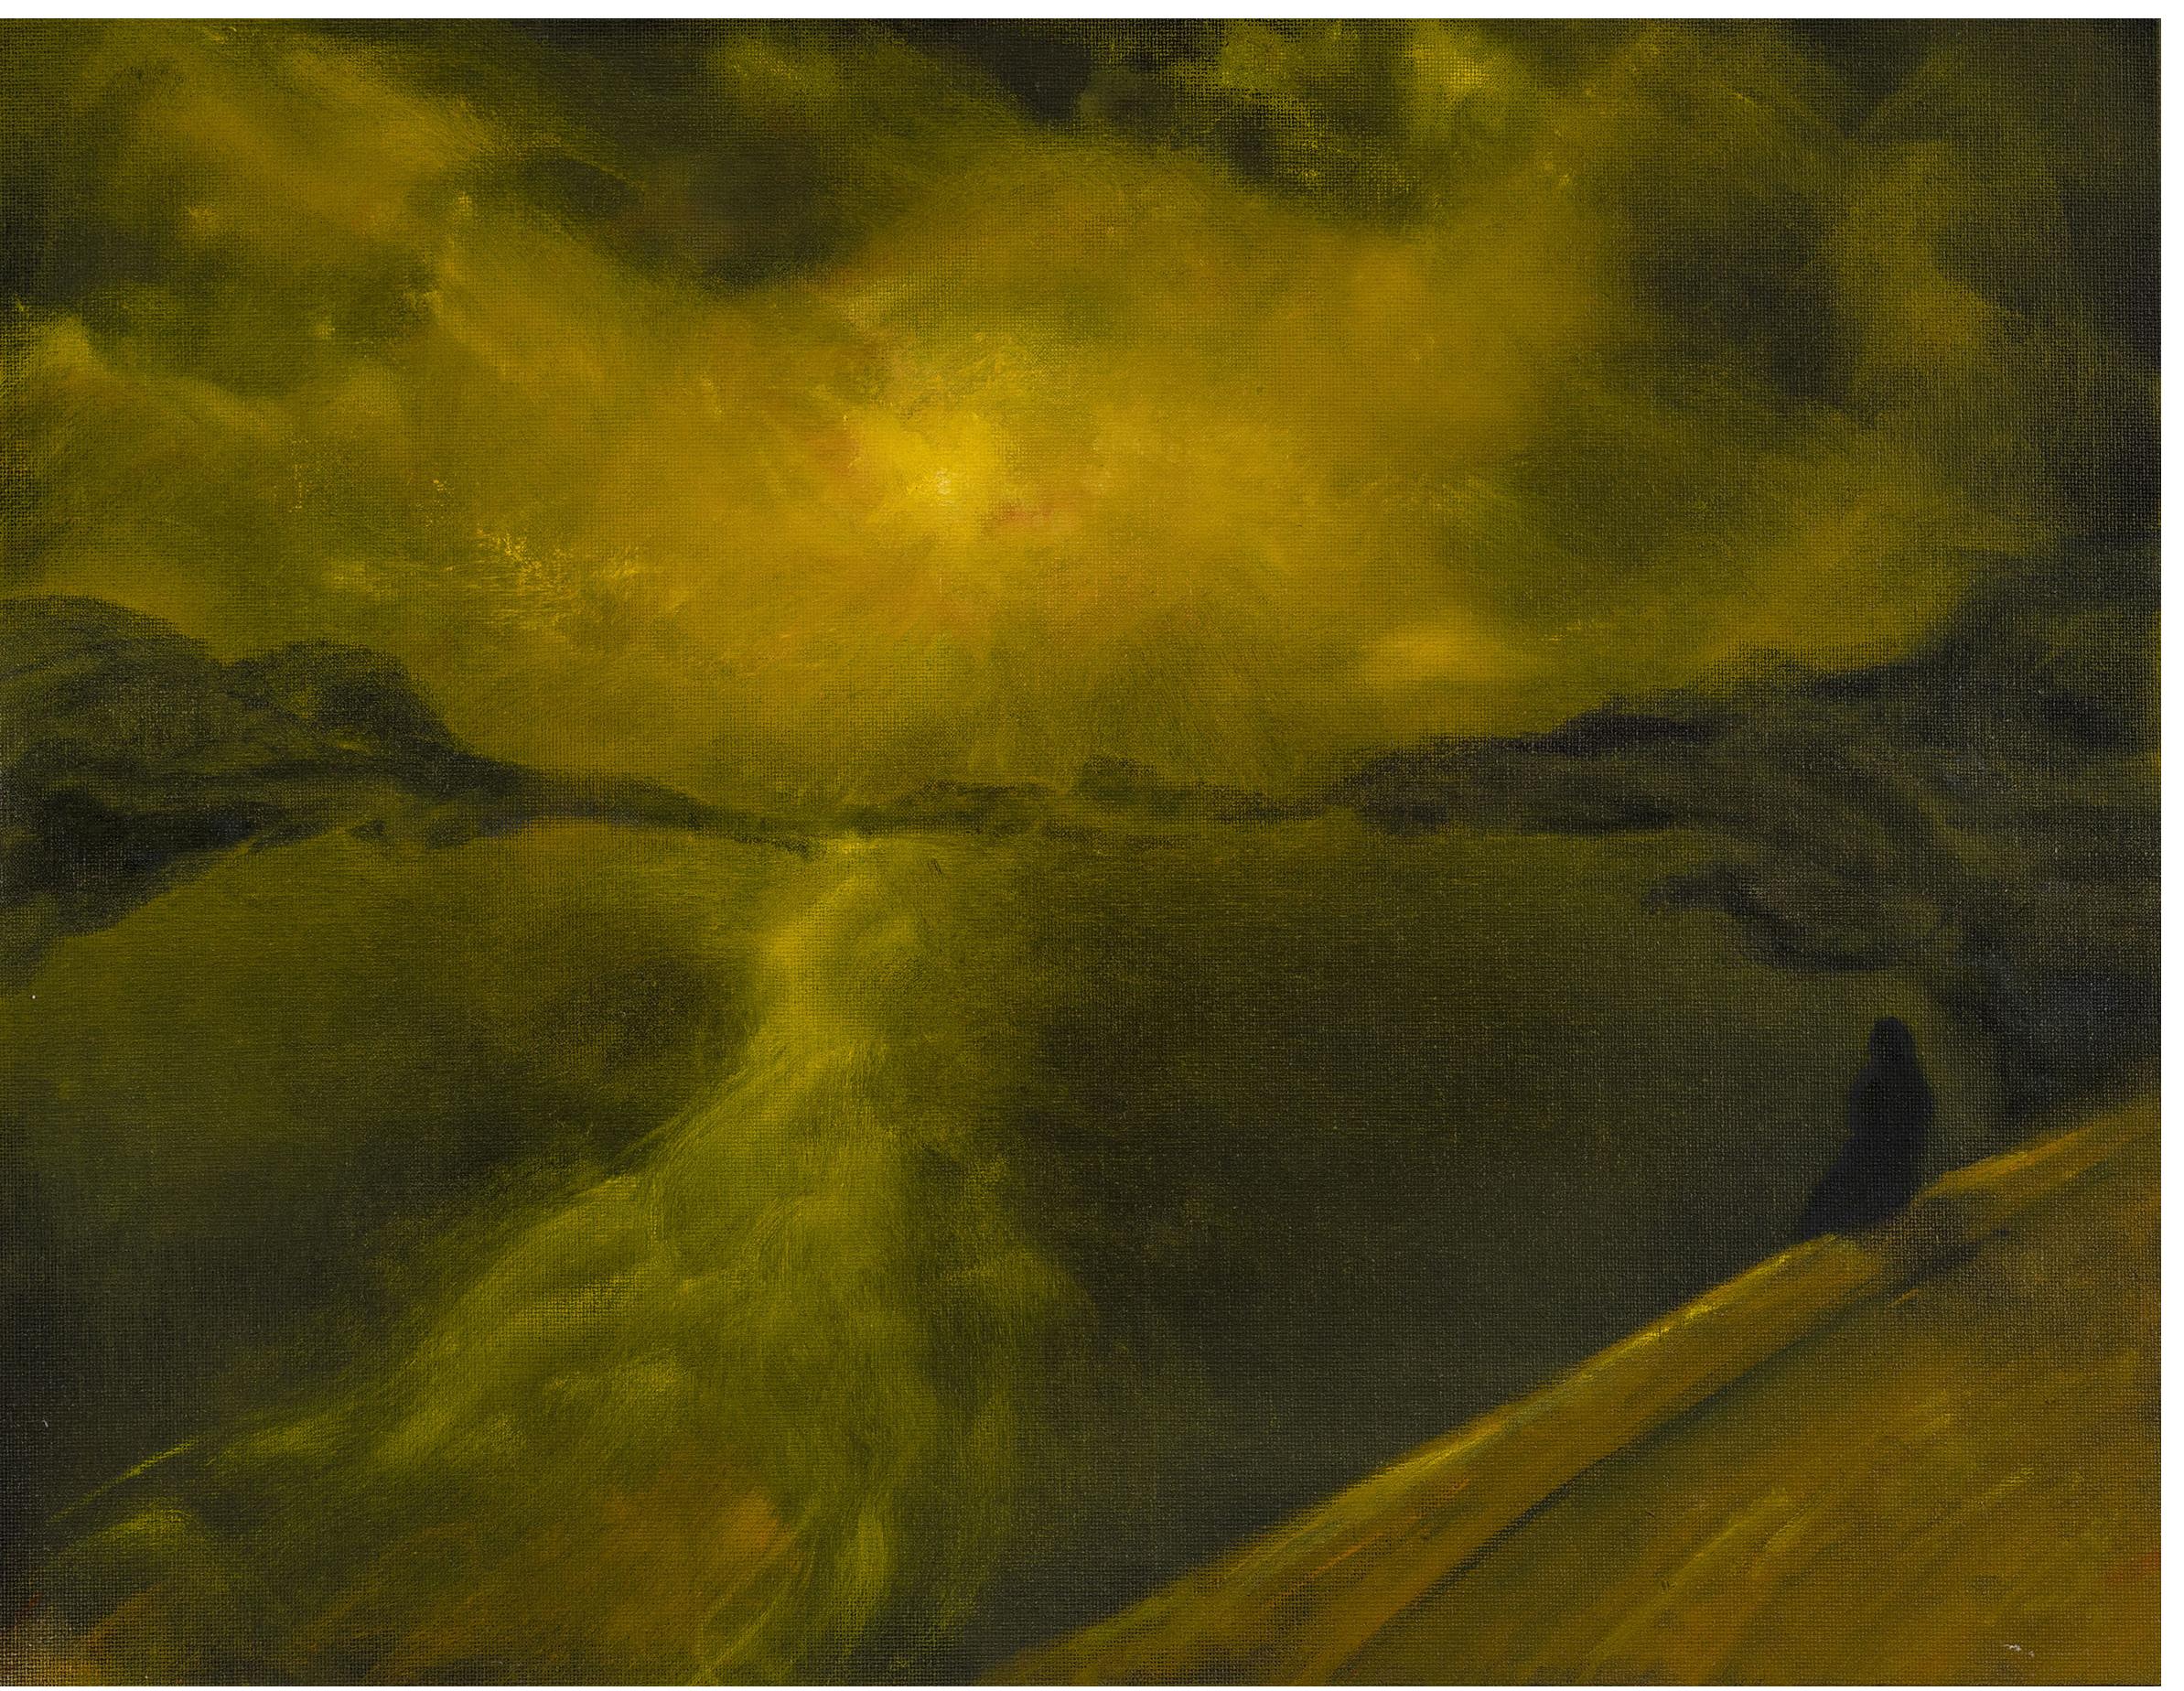 Matthew Bateson - "Melancholia", oil on canvas board, 30 x 40 cm